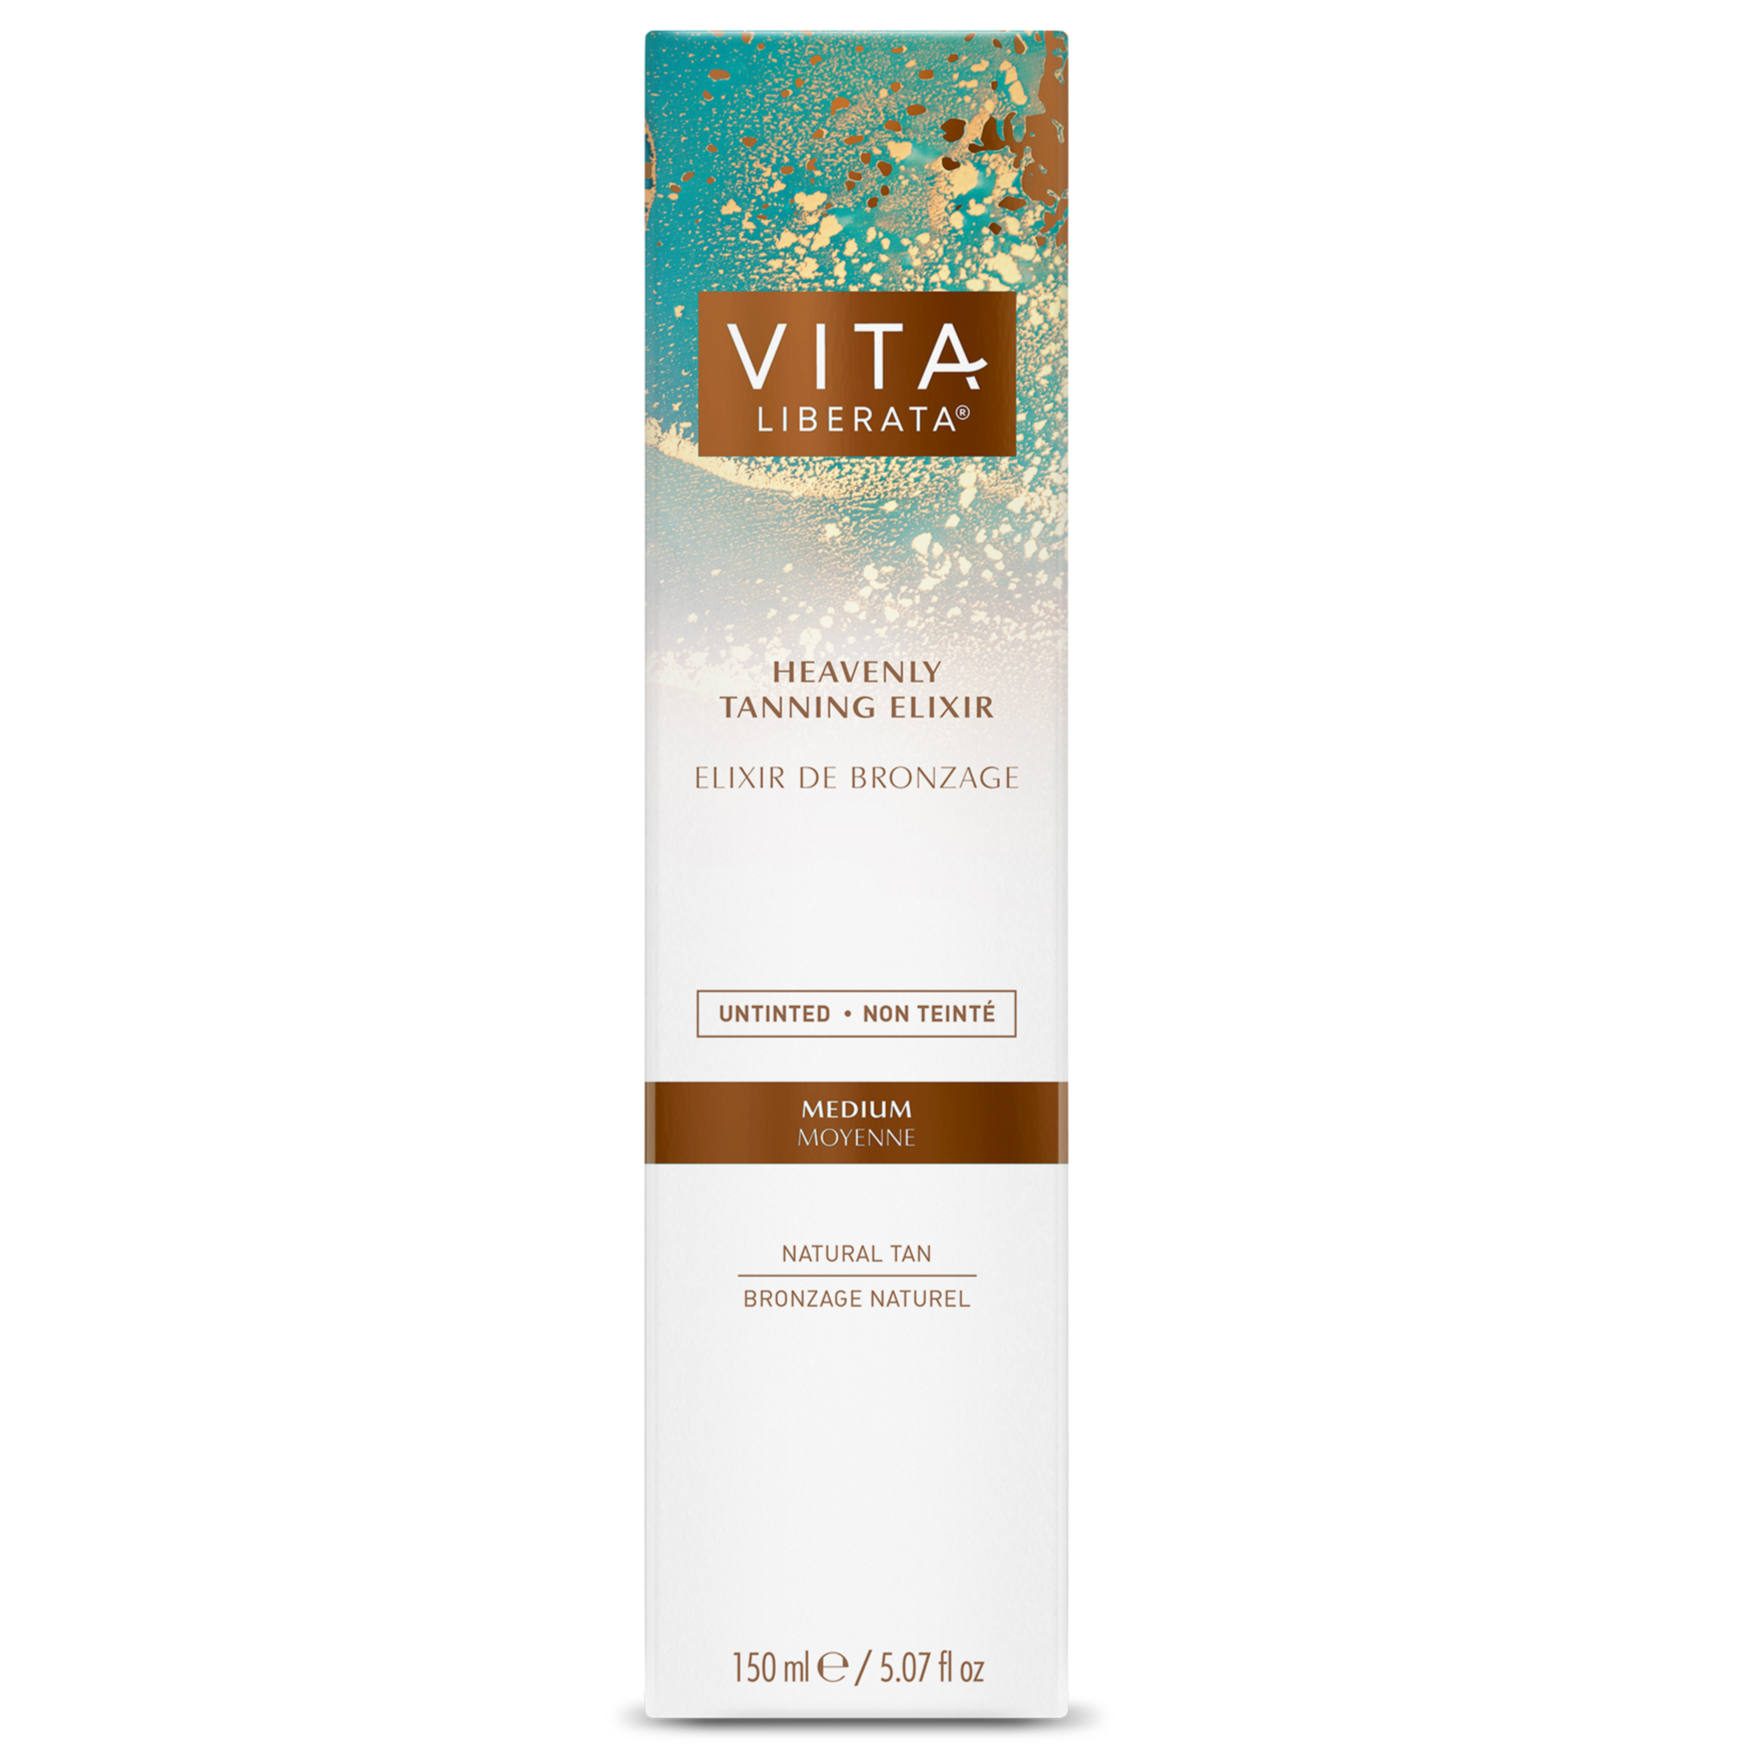 Vita Liberata Untinted Heavenly Tanning Elixir - Medium, packaging